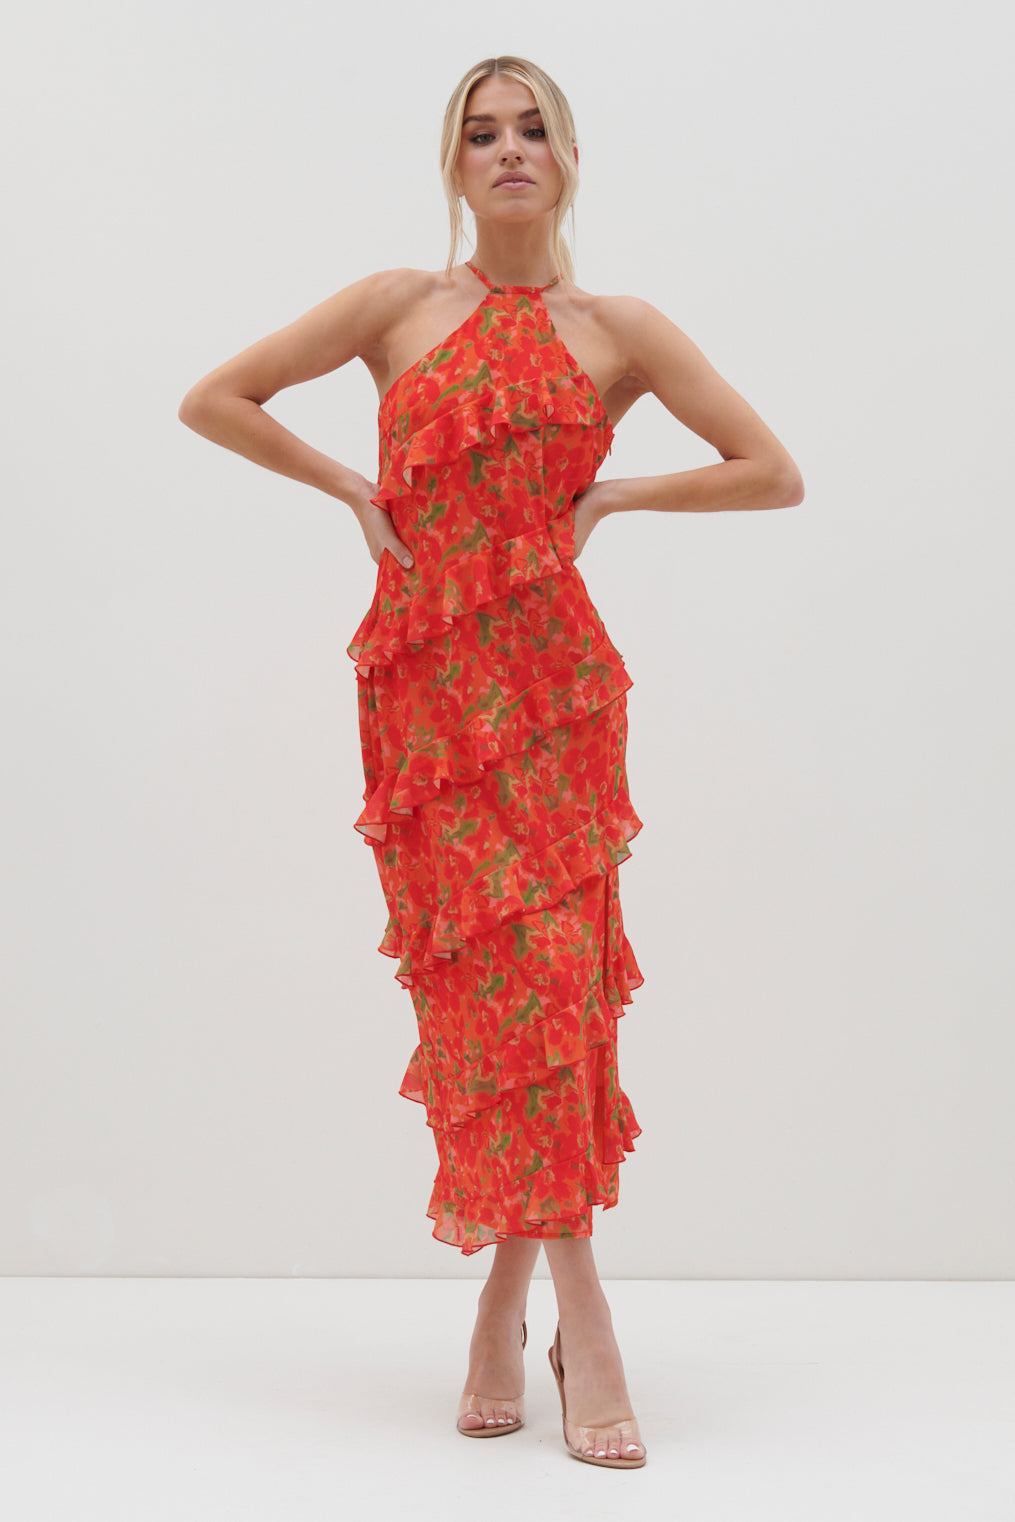 Robe Katy Ruffle Midaxi - Floral rouge et orange